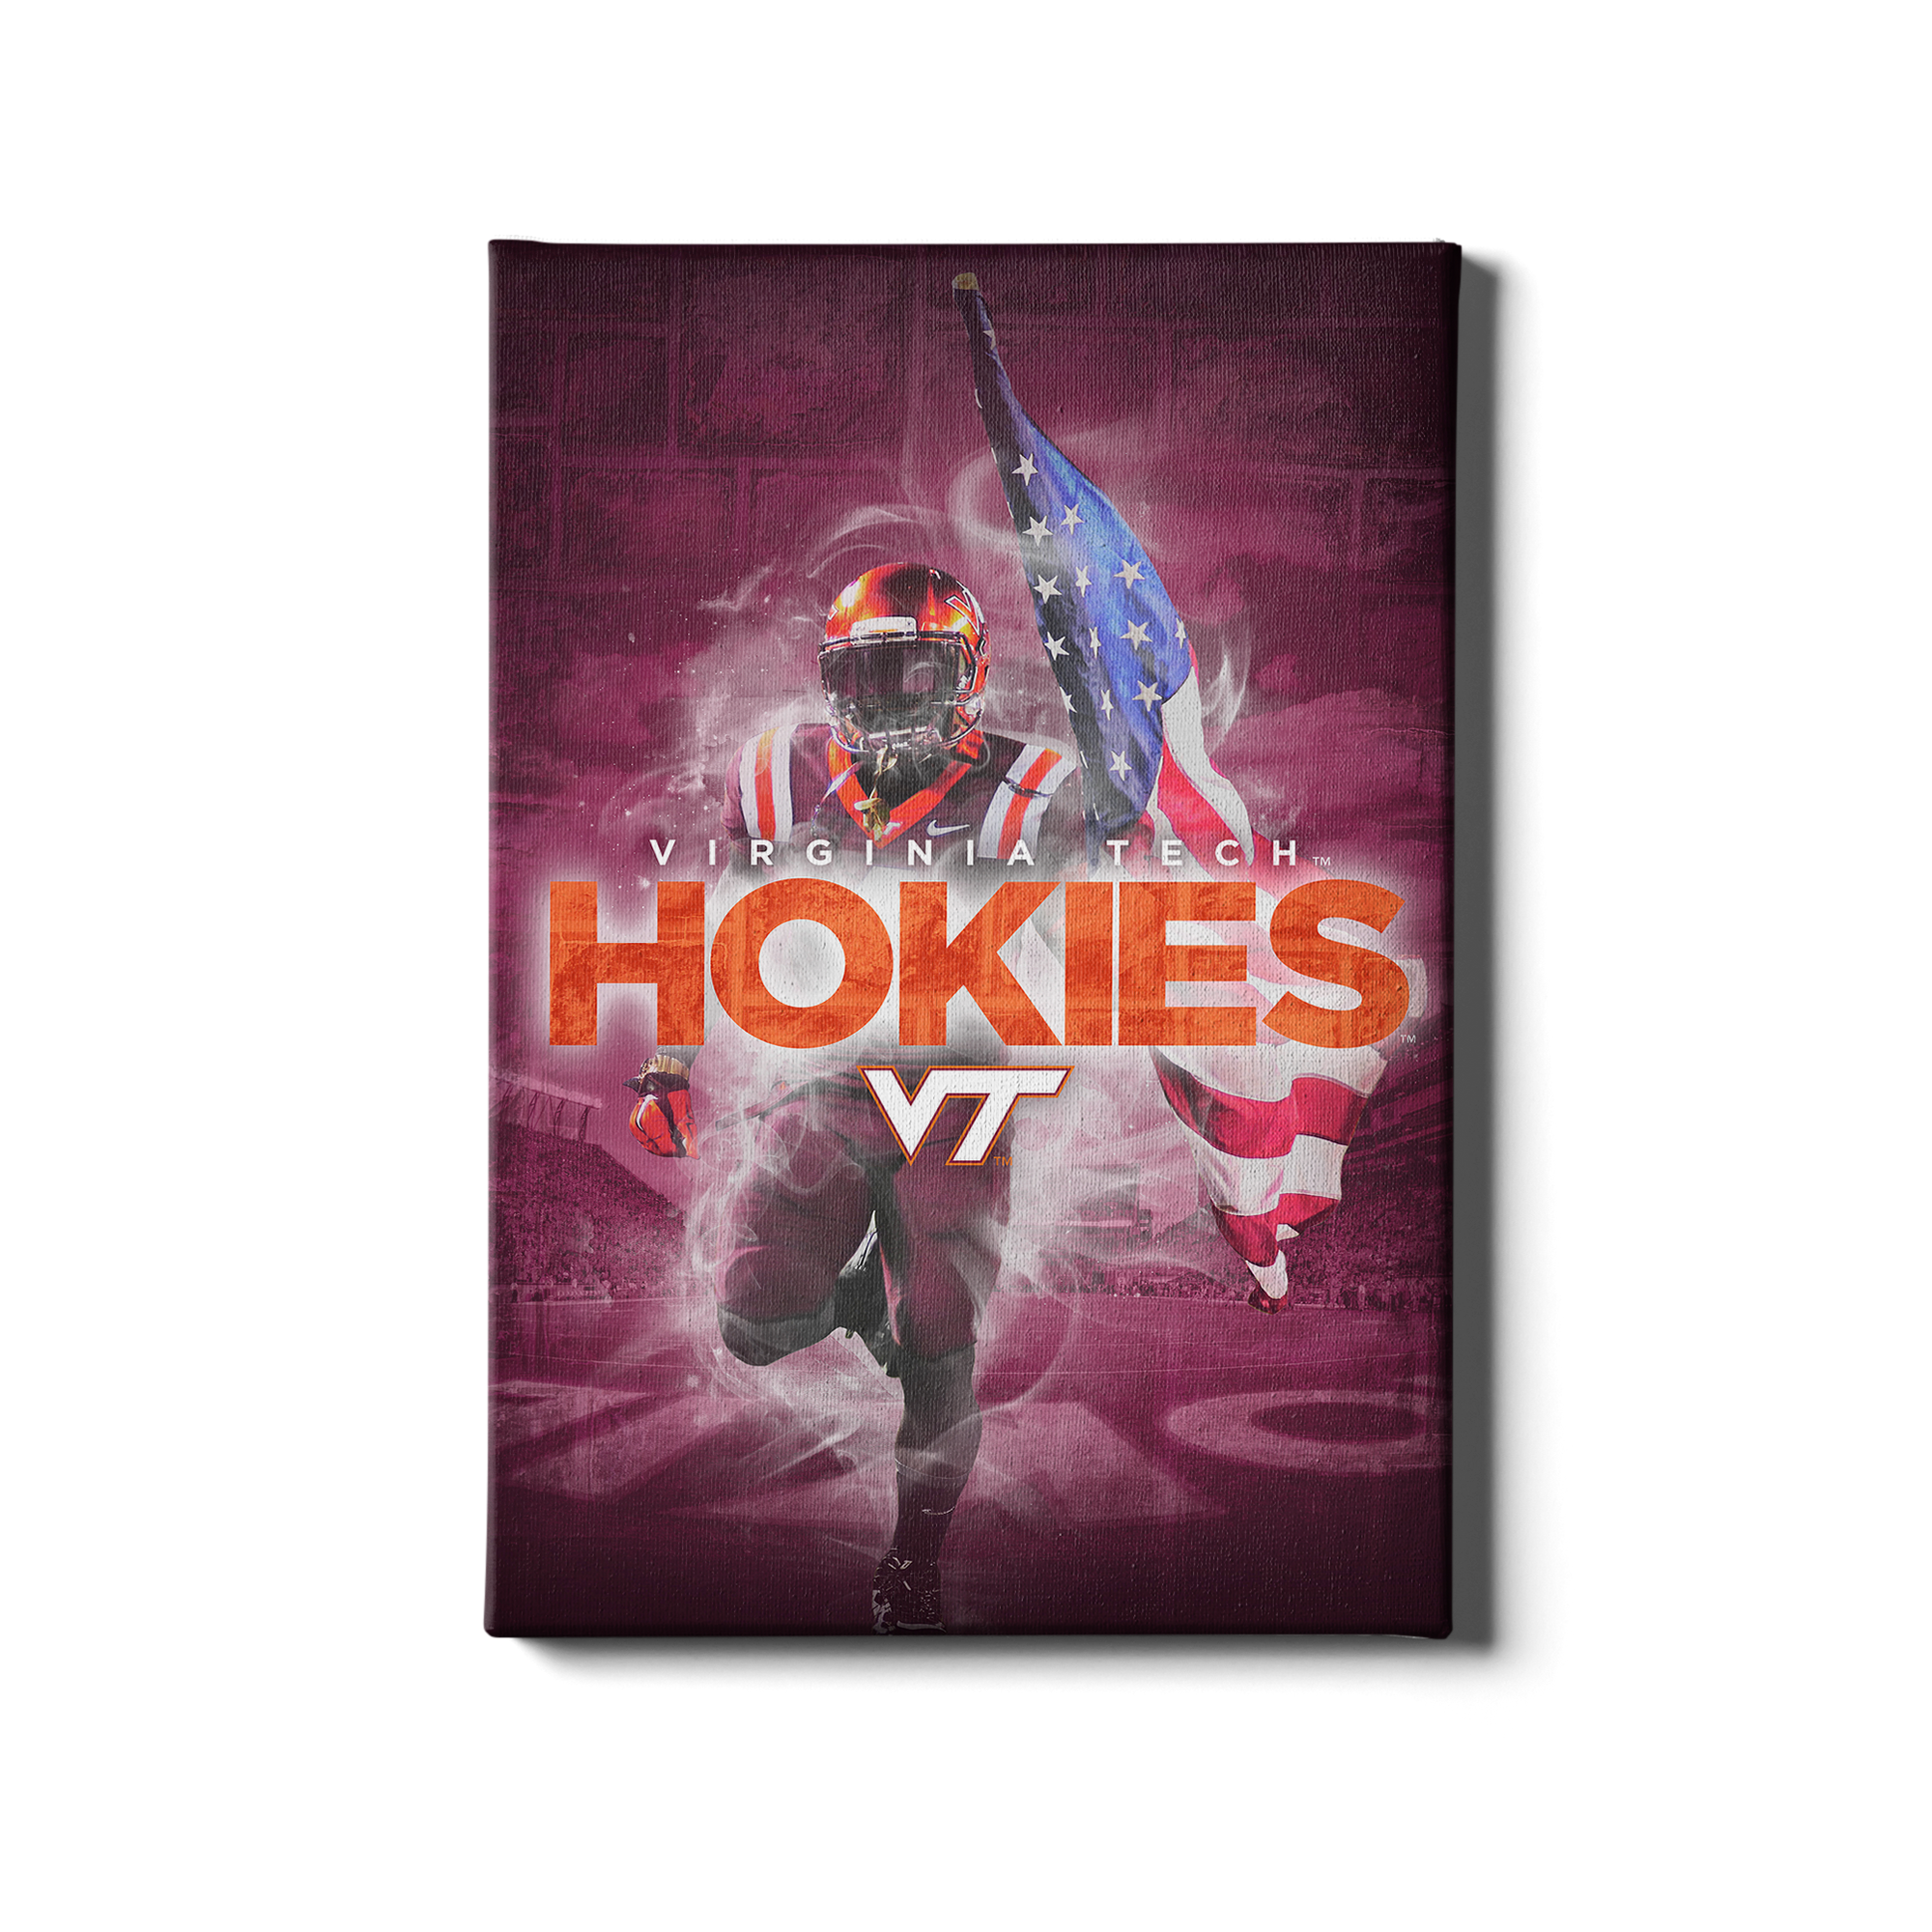 Virginia Tech Hokies - Hokie Smoke - College Wall Art #Canvas